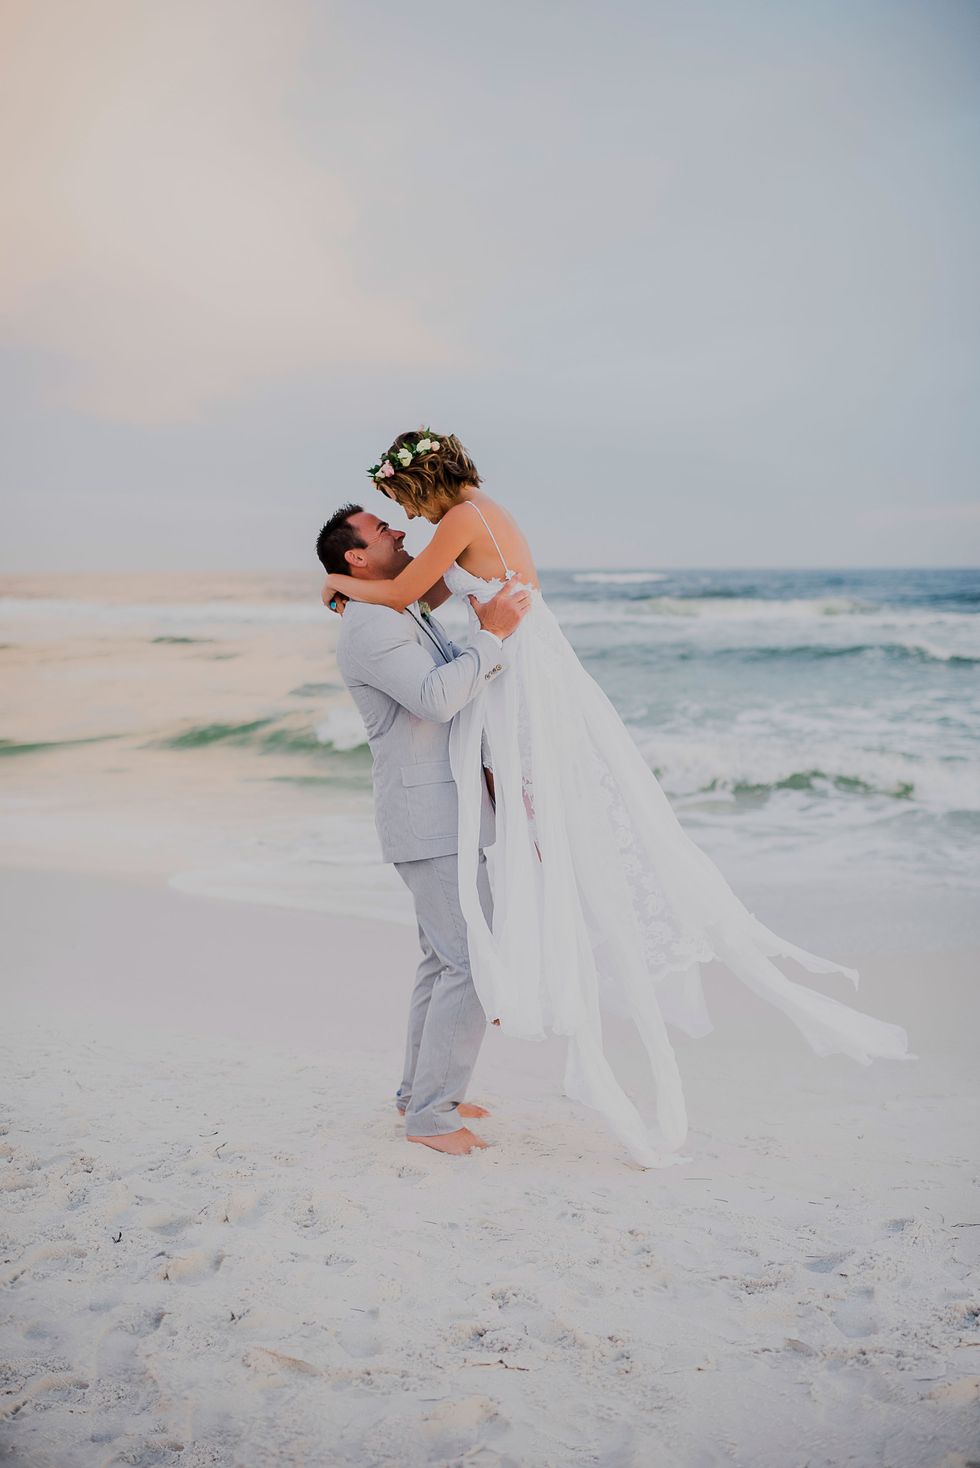 Bridal clothing, Dress, People on beach, Textile, Photograph, Bride, Standing, Happy, Wedding dress, Bridal veil, 